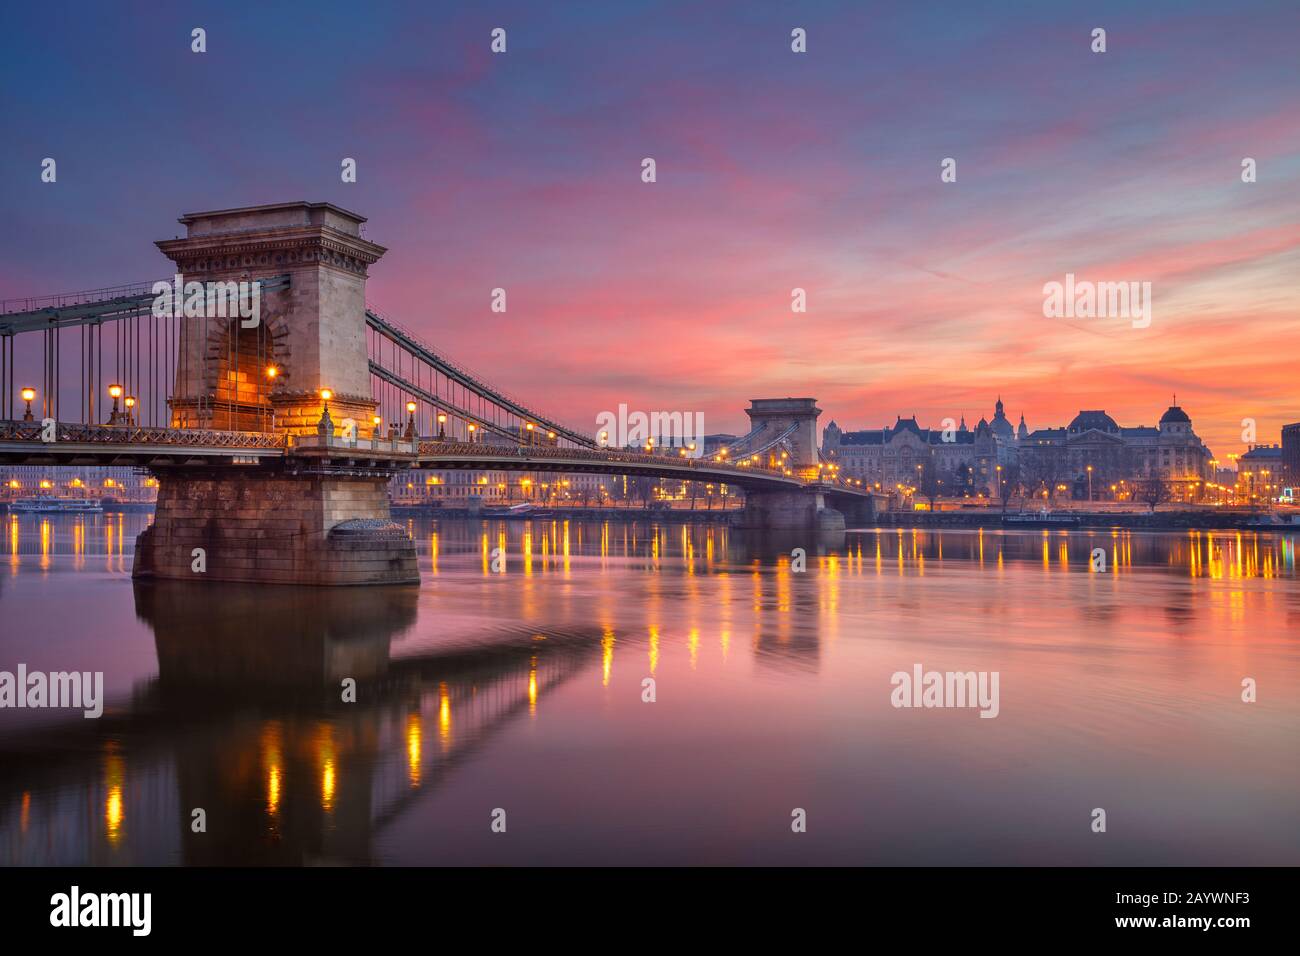 Budapest, Hungary. Cityscape image of Budapest skyline with the Chain Bridge building during beautiful winter sunrise. Stock Photo